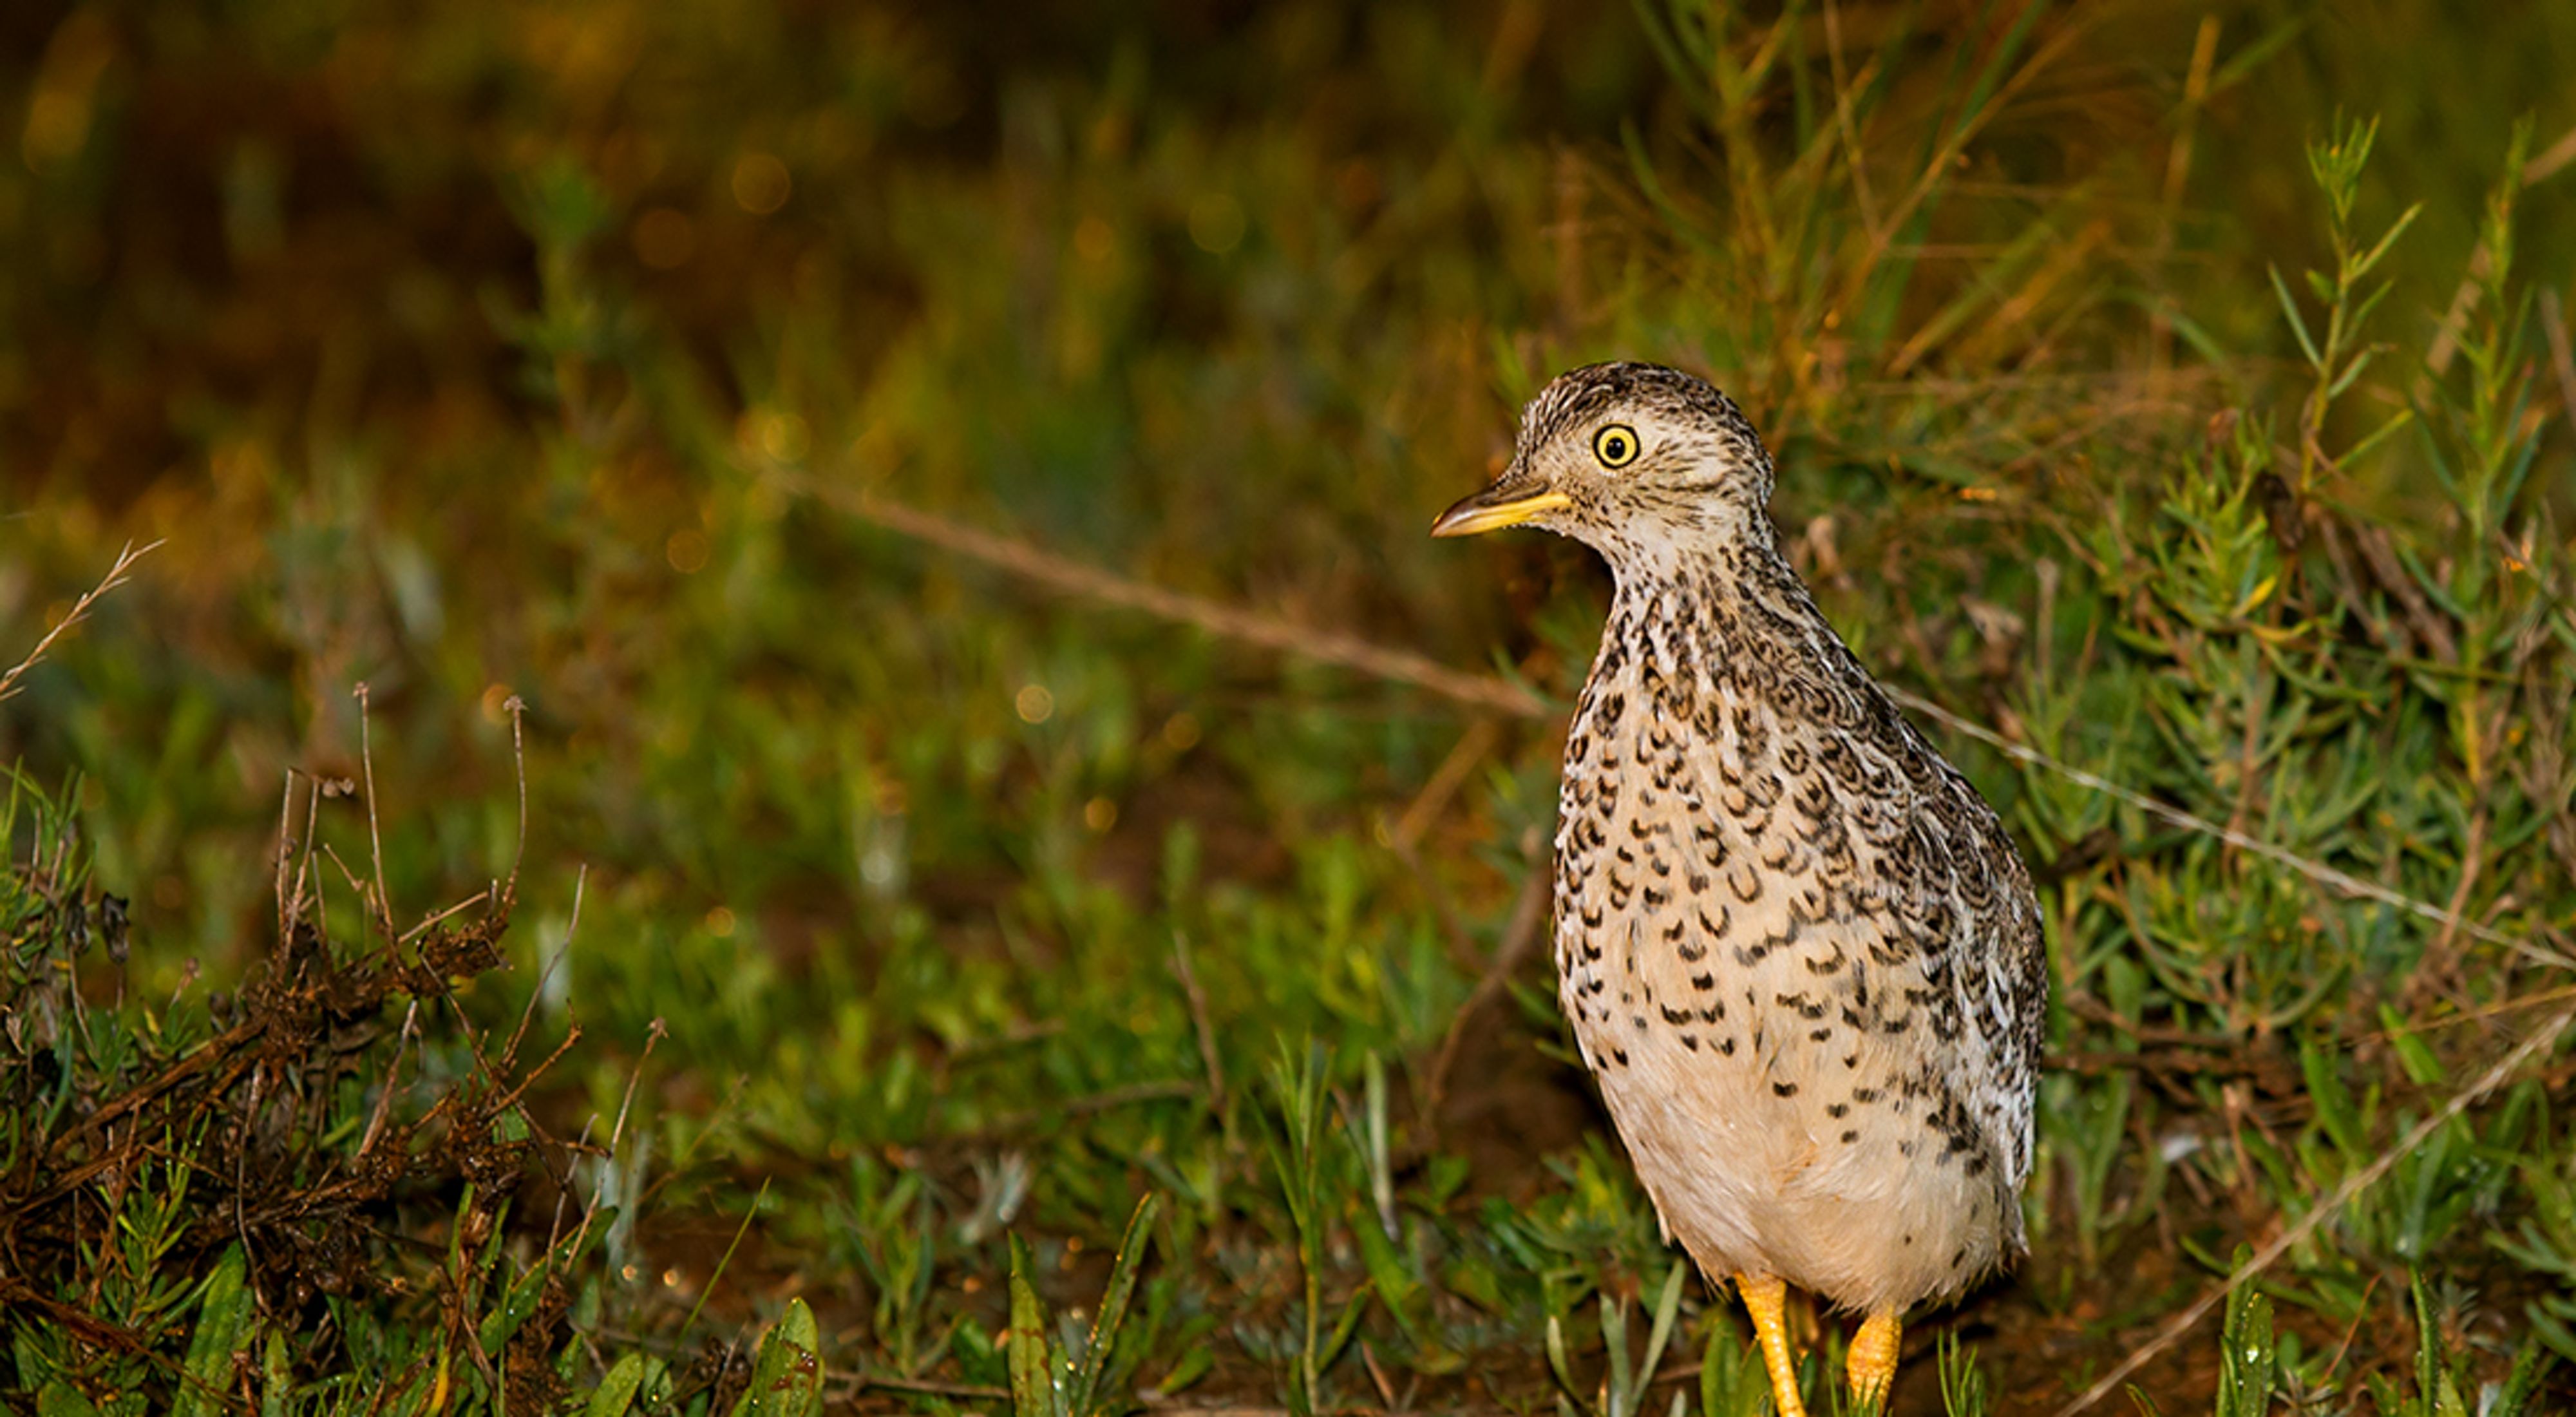 is a rare quail-like bird found in Riverina region of NSW